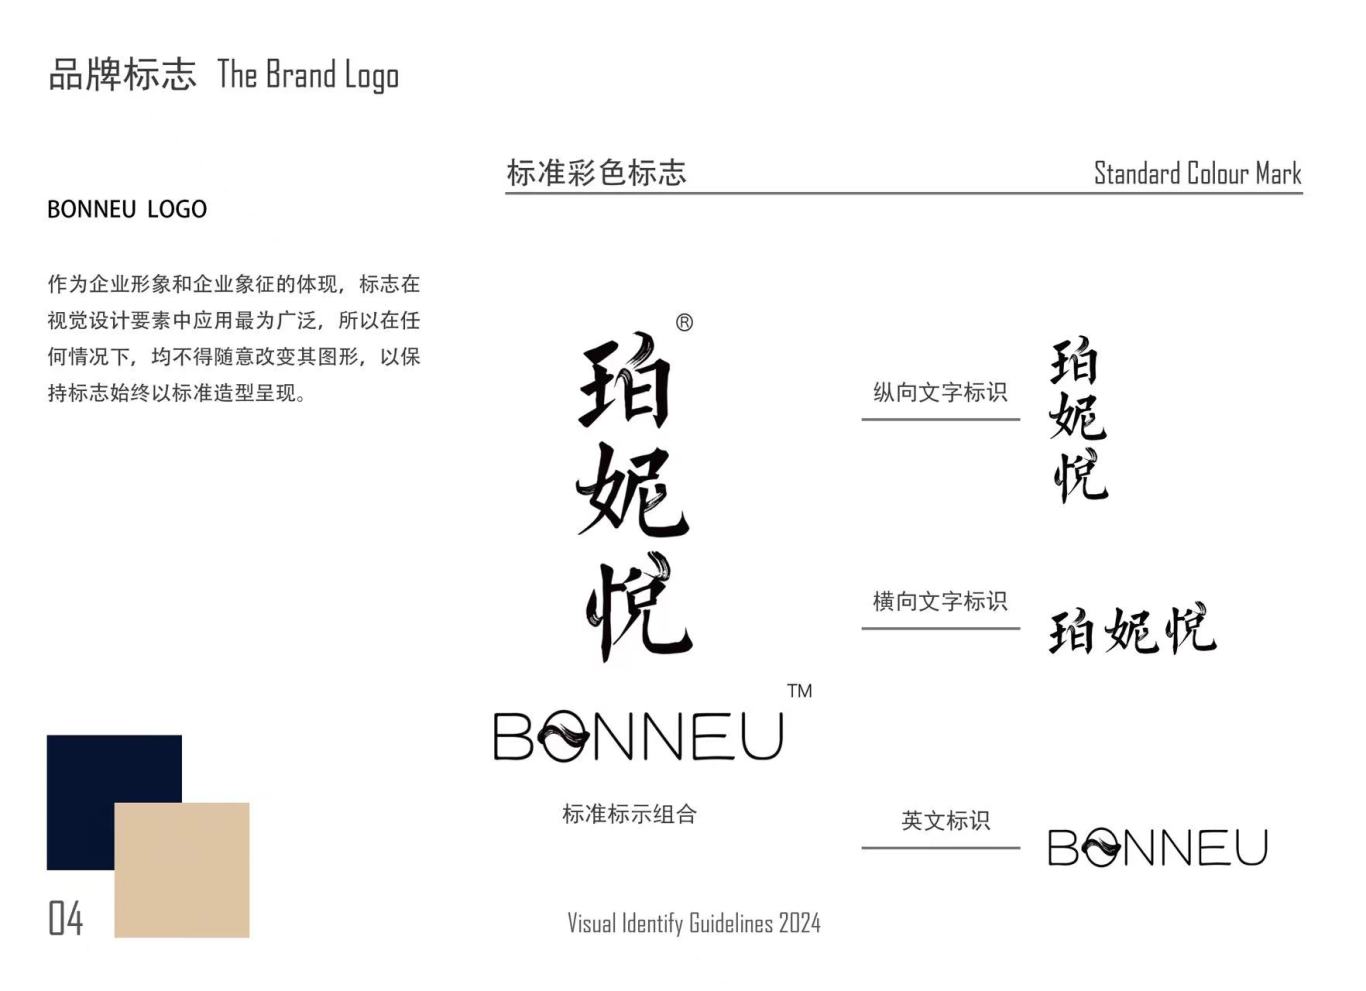 BONNEU国姿铂妮悦 民族护肤品牌 包装设计及品牌策划图3